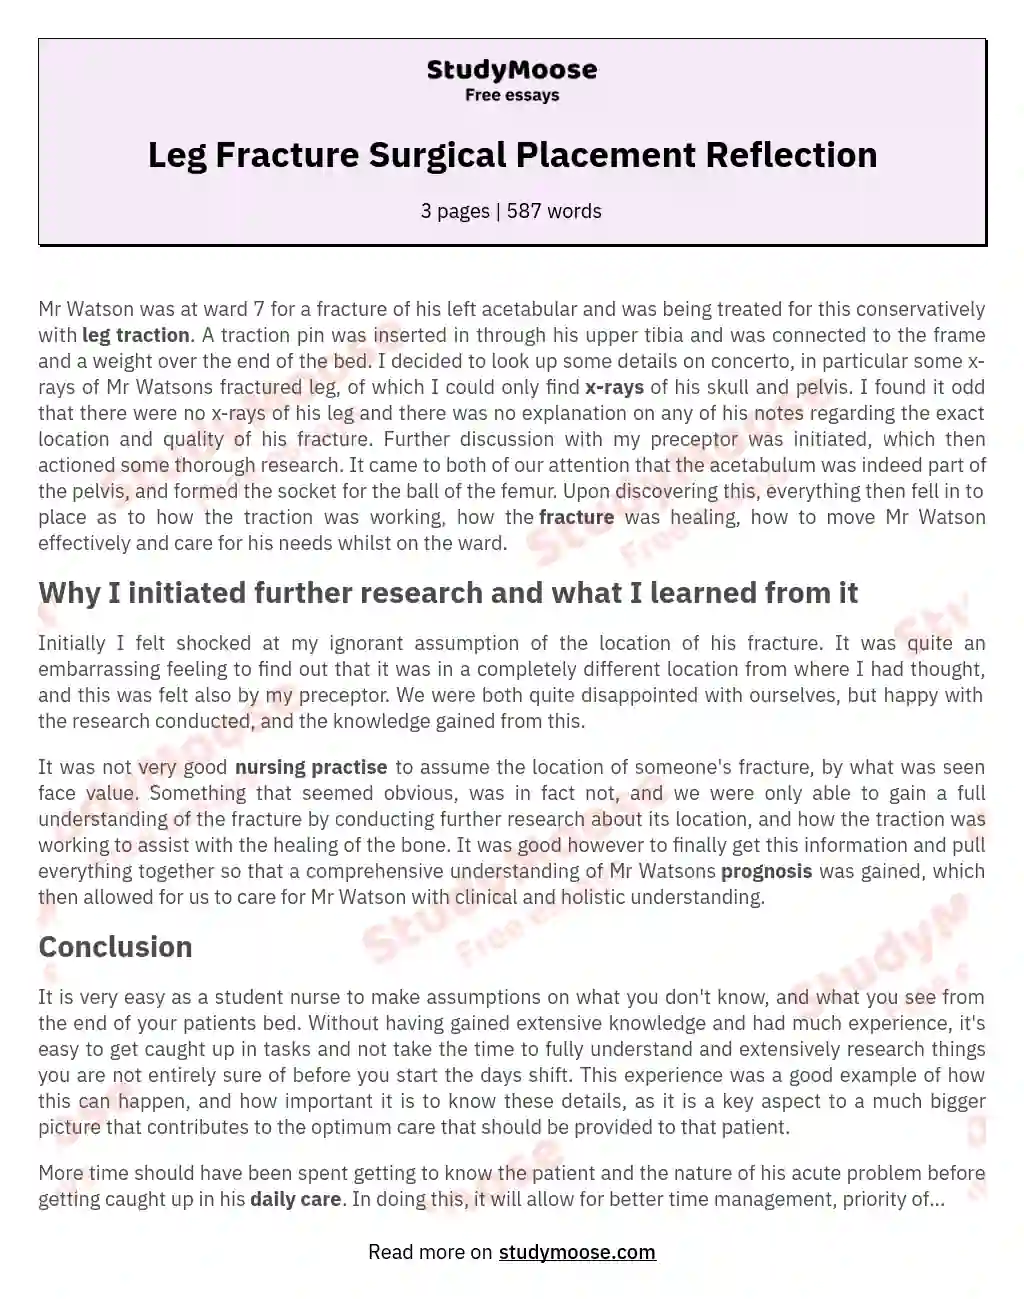 Leg Fracture Surgical Placement Reflection essay